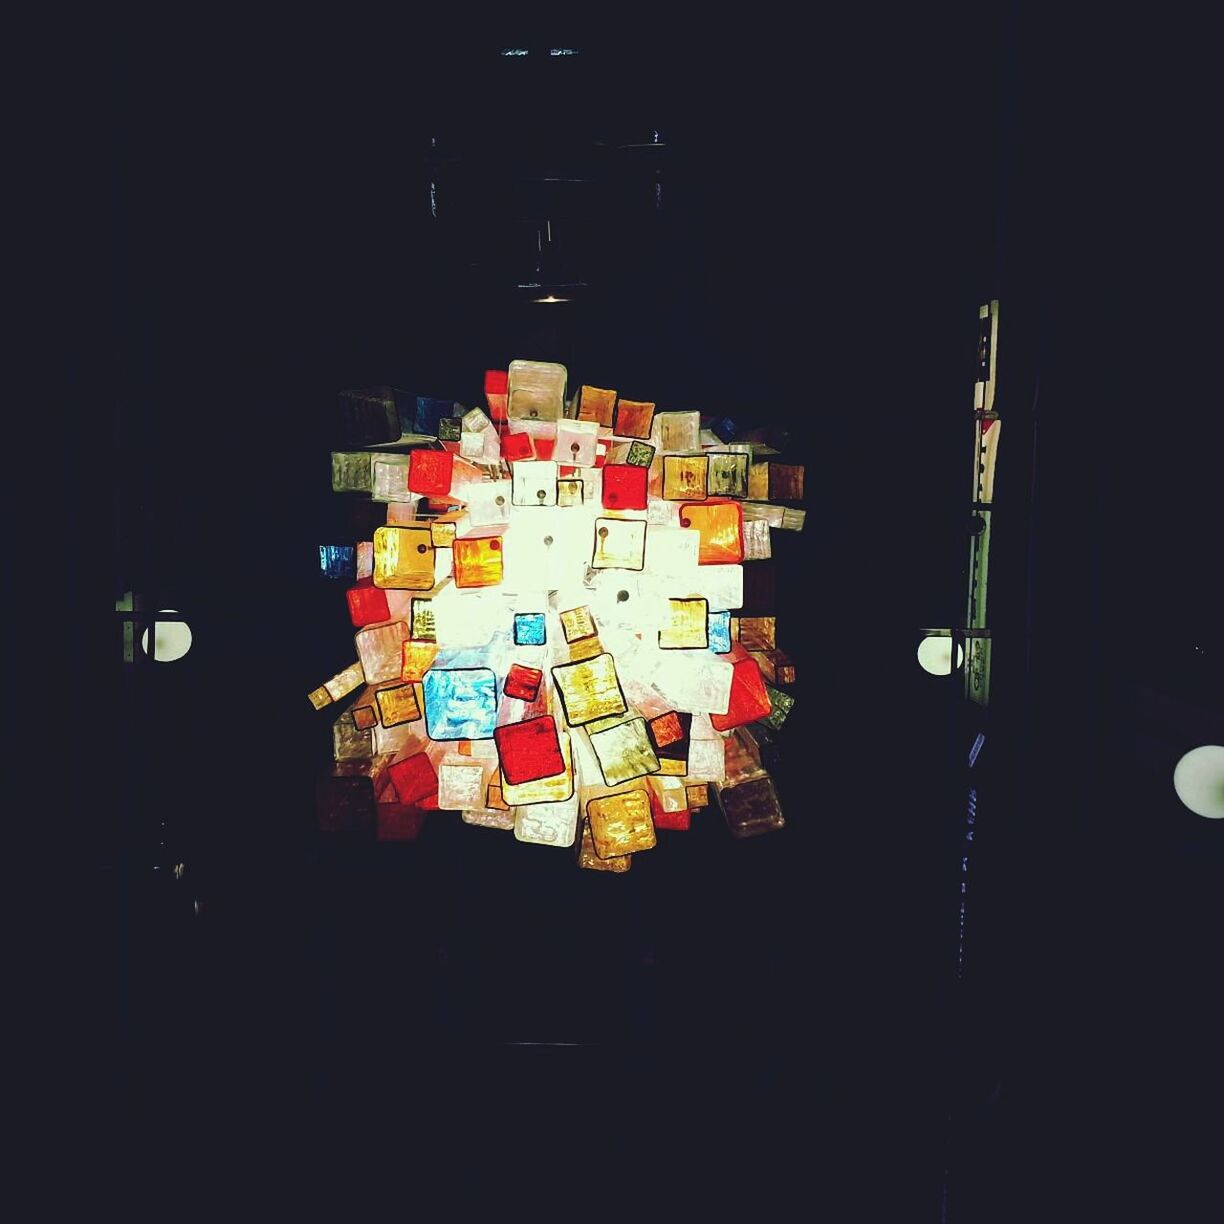 Directly below shot of illuminated colorful lanterns in darkroom